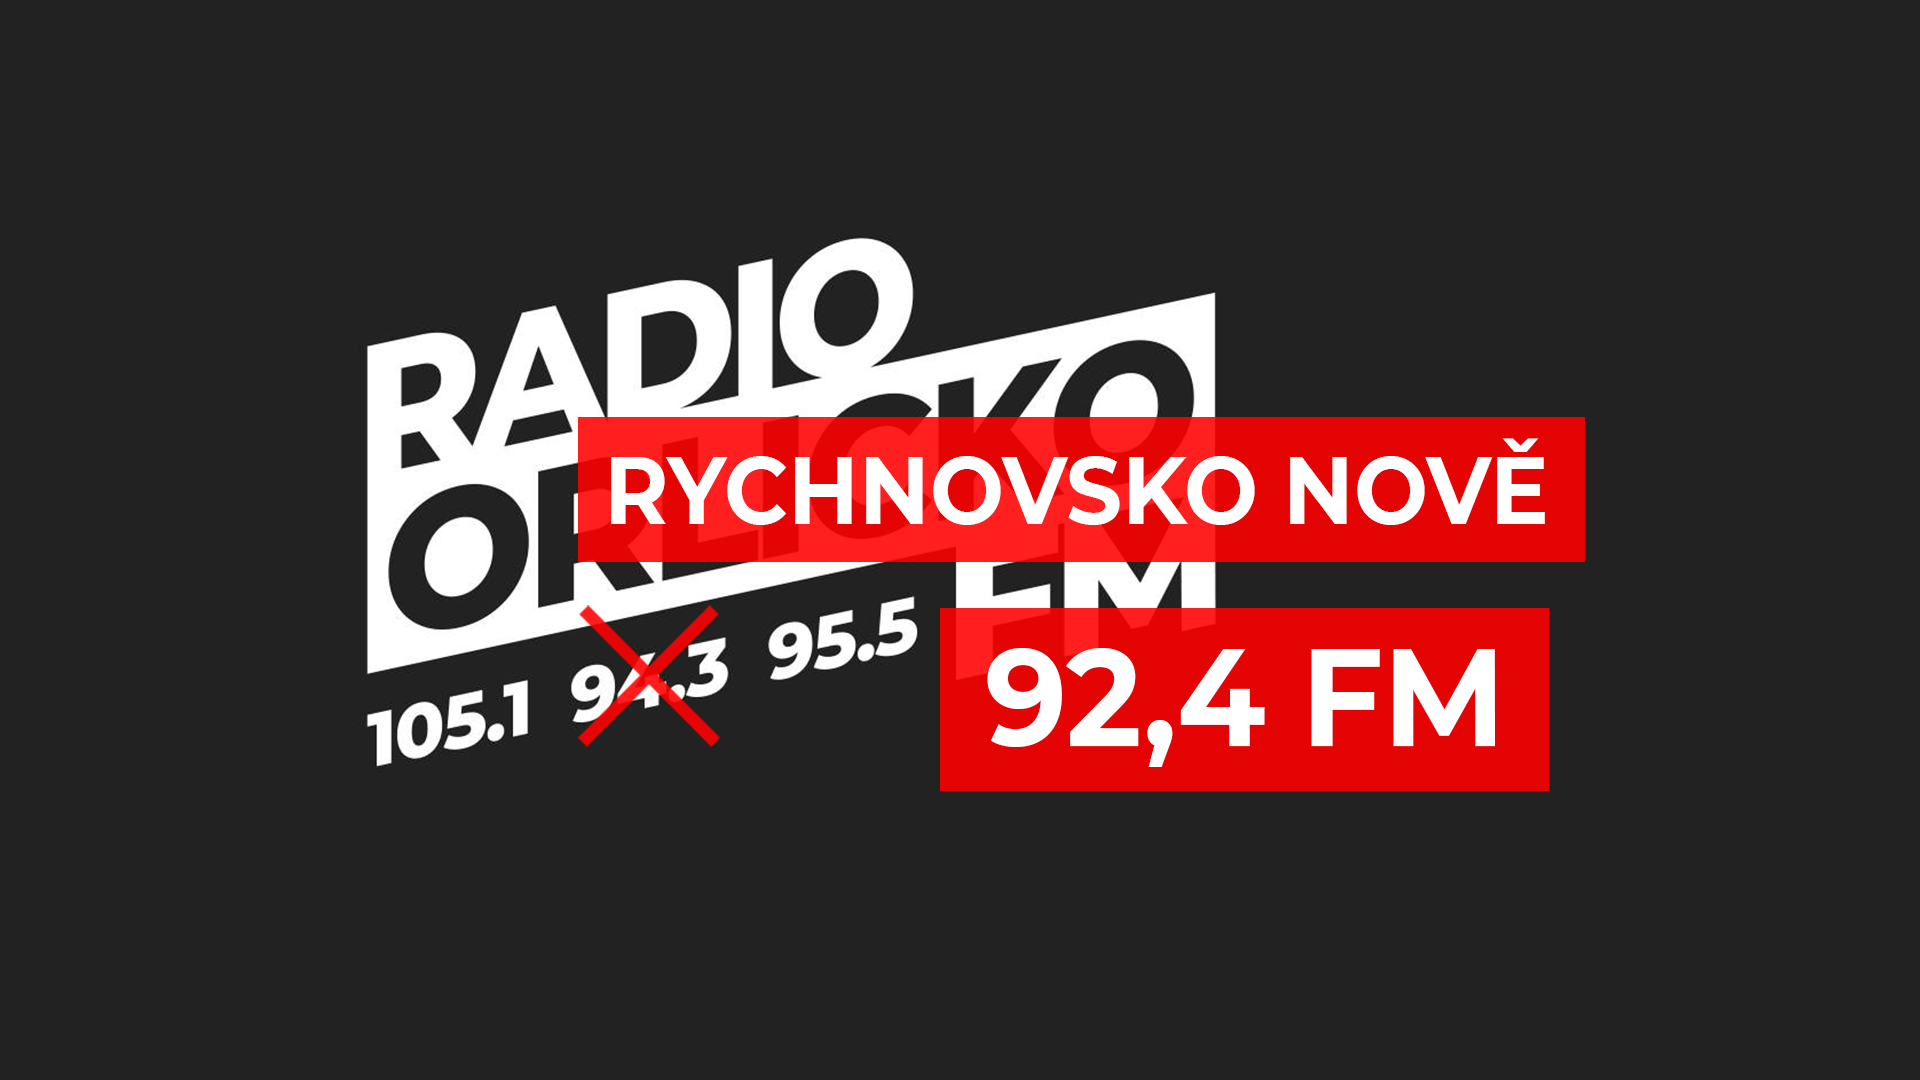 NOVÁ FREKVENCE NA RYCHNOVSKU - 92,4 FM